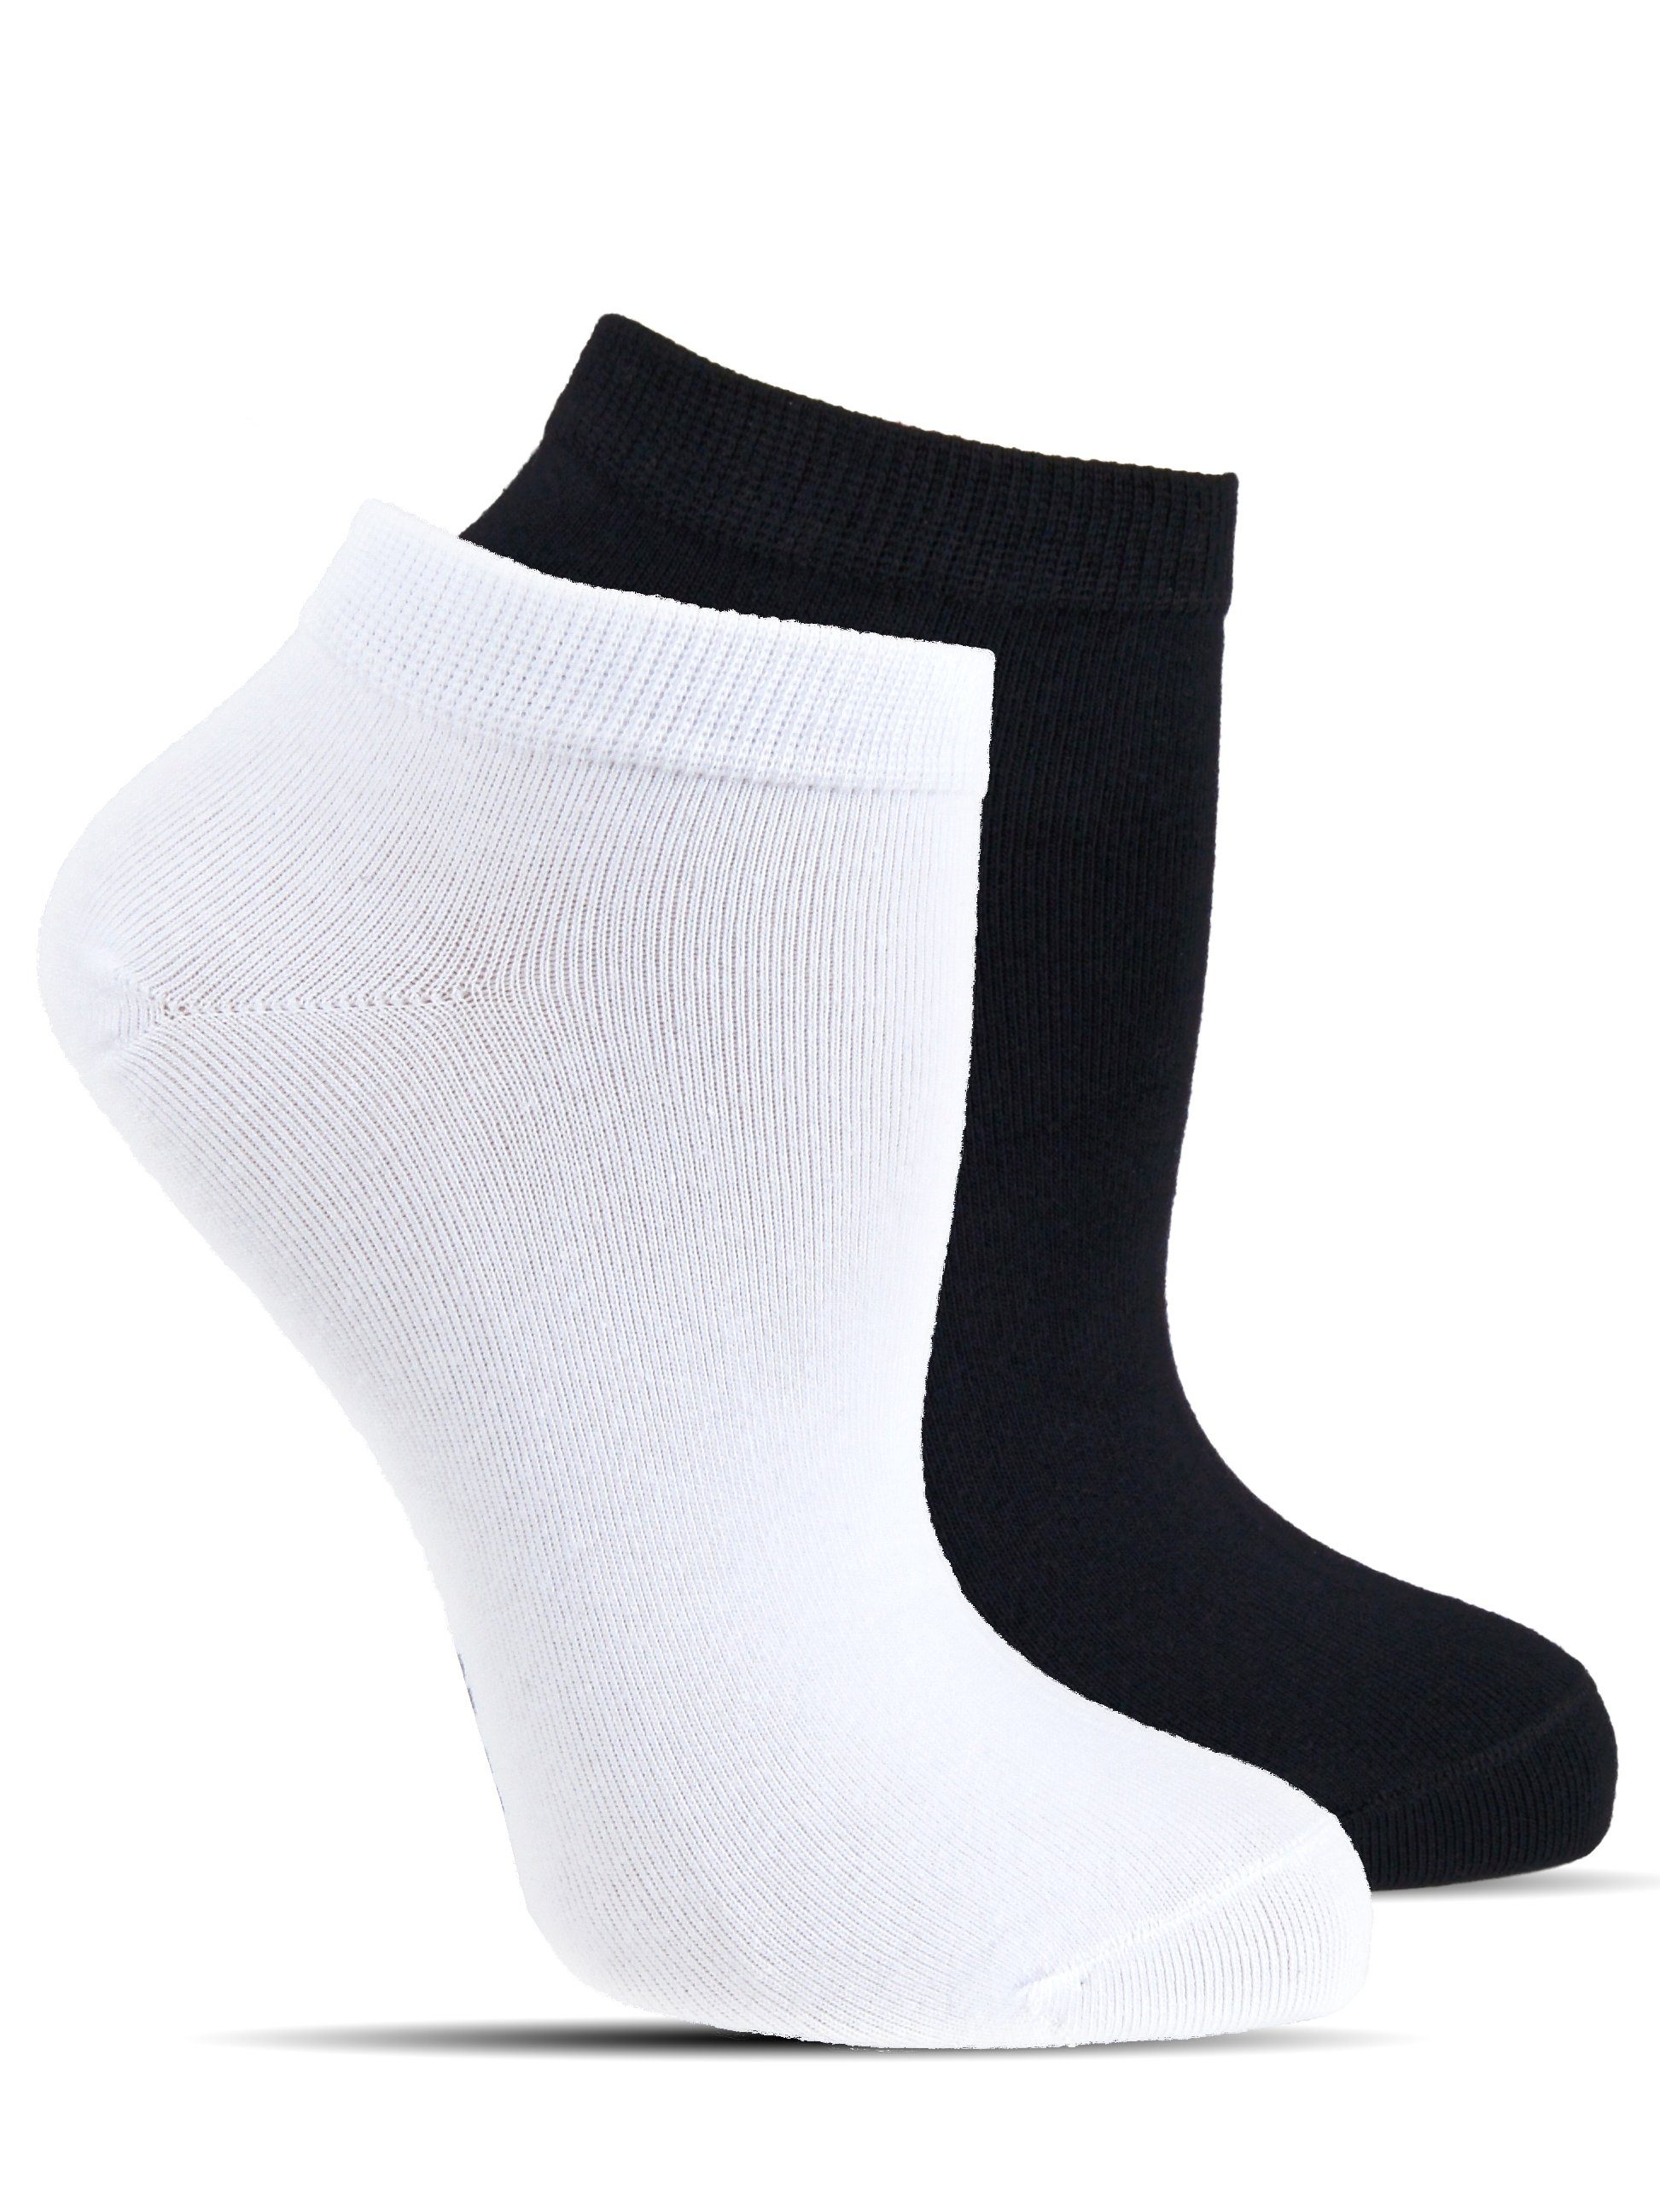 Schwarz/Weiß / Weiß Socked (12 Kurzsocken Sneakersocken + Baumwolle, Paar) Herren Damen Schwarz